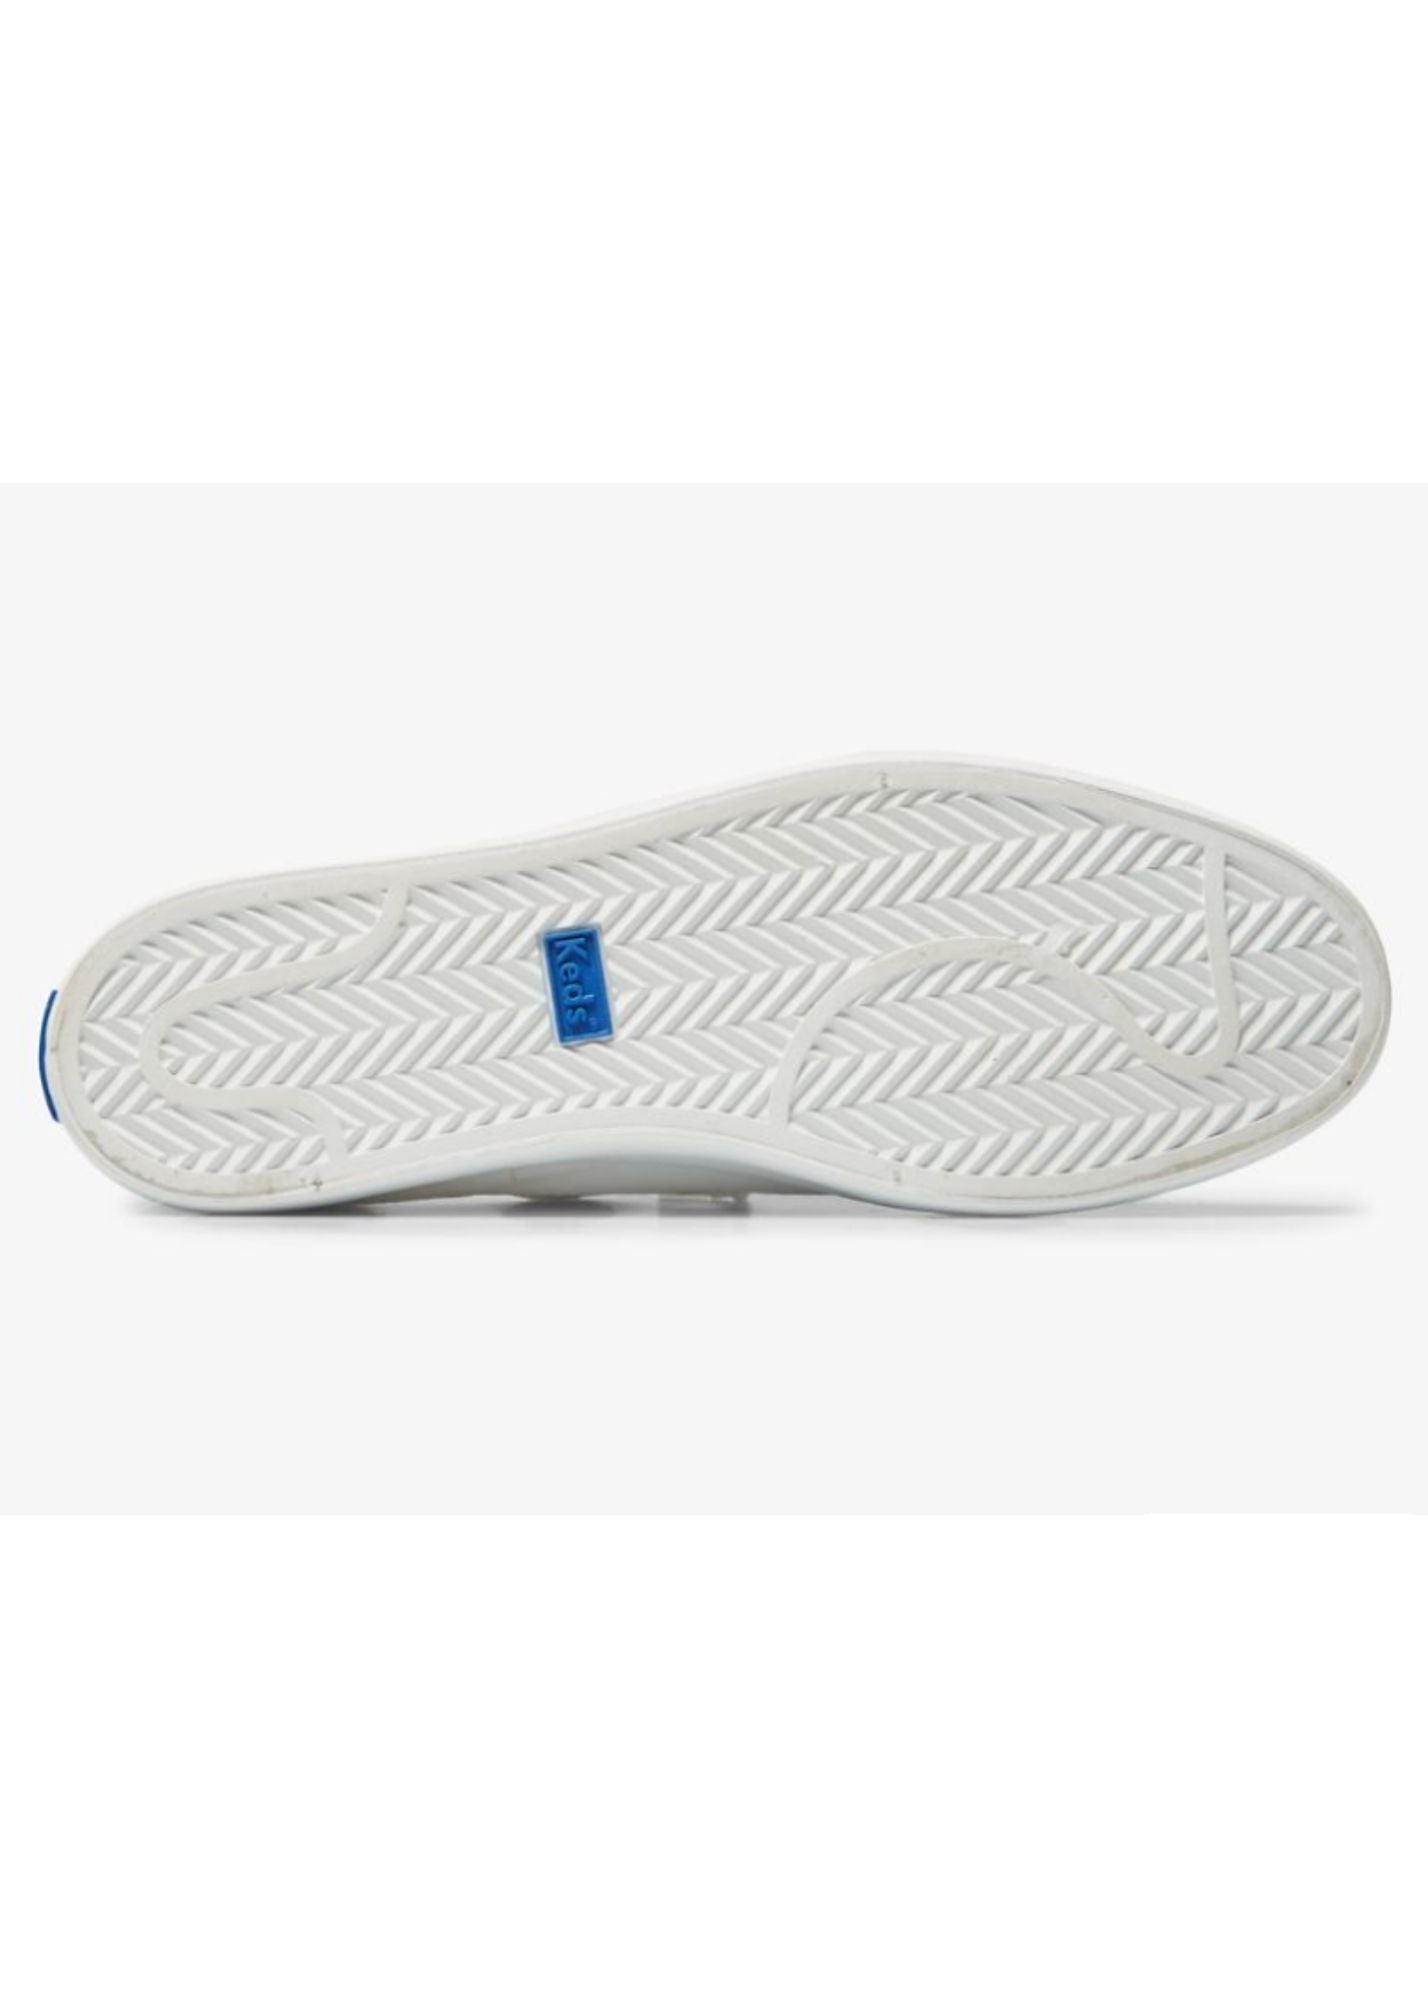 Keds® Kickback White Canvas Sneaker Shoes